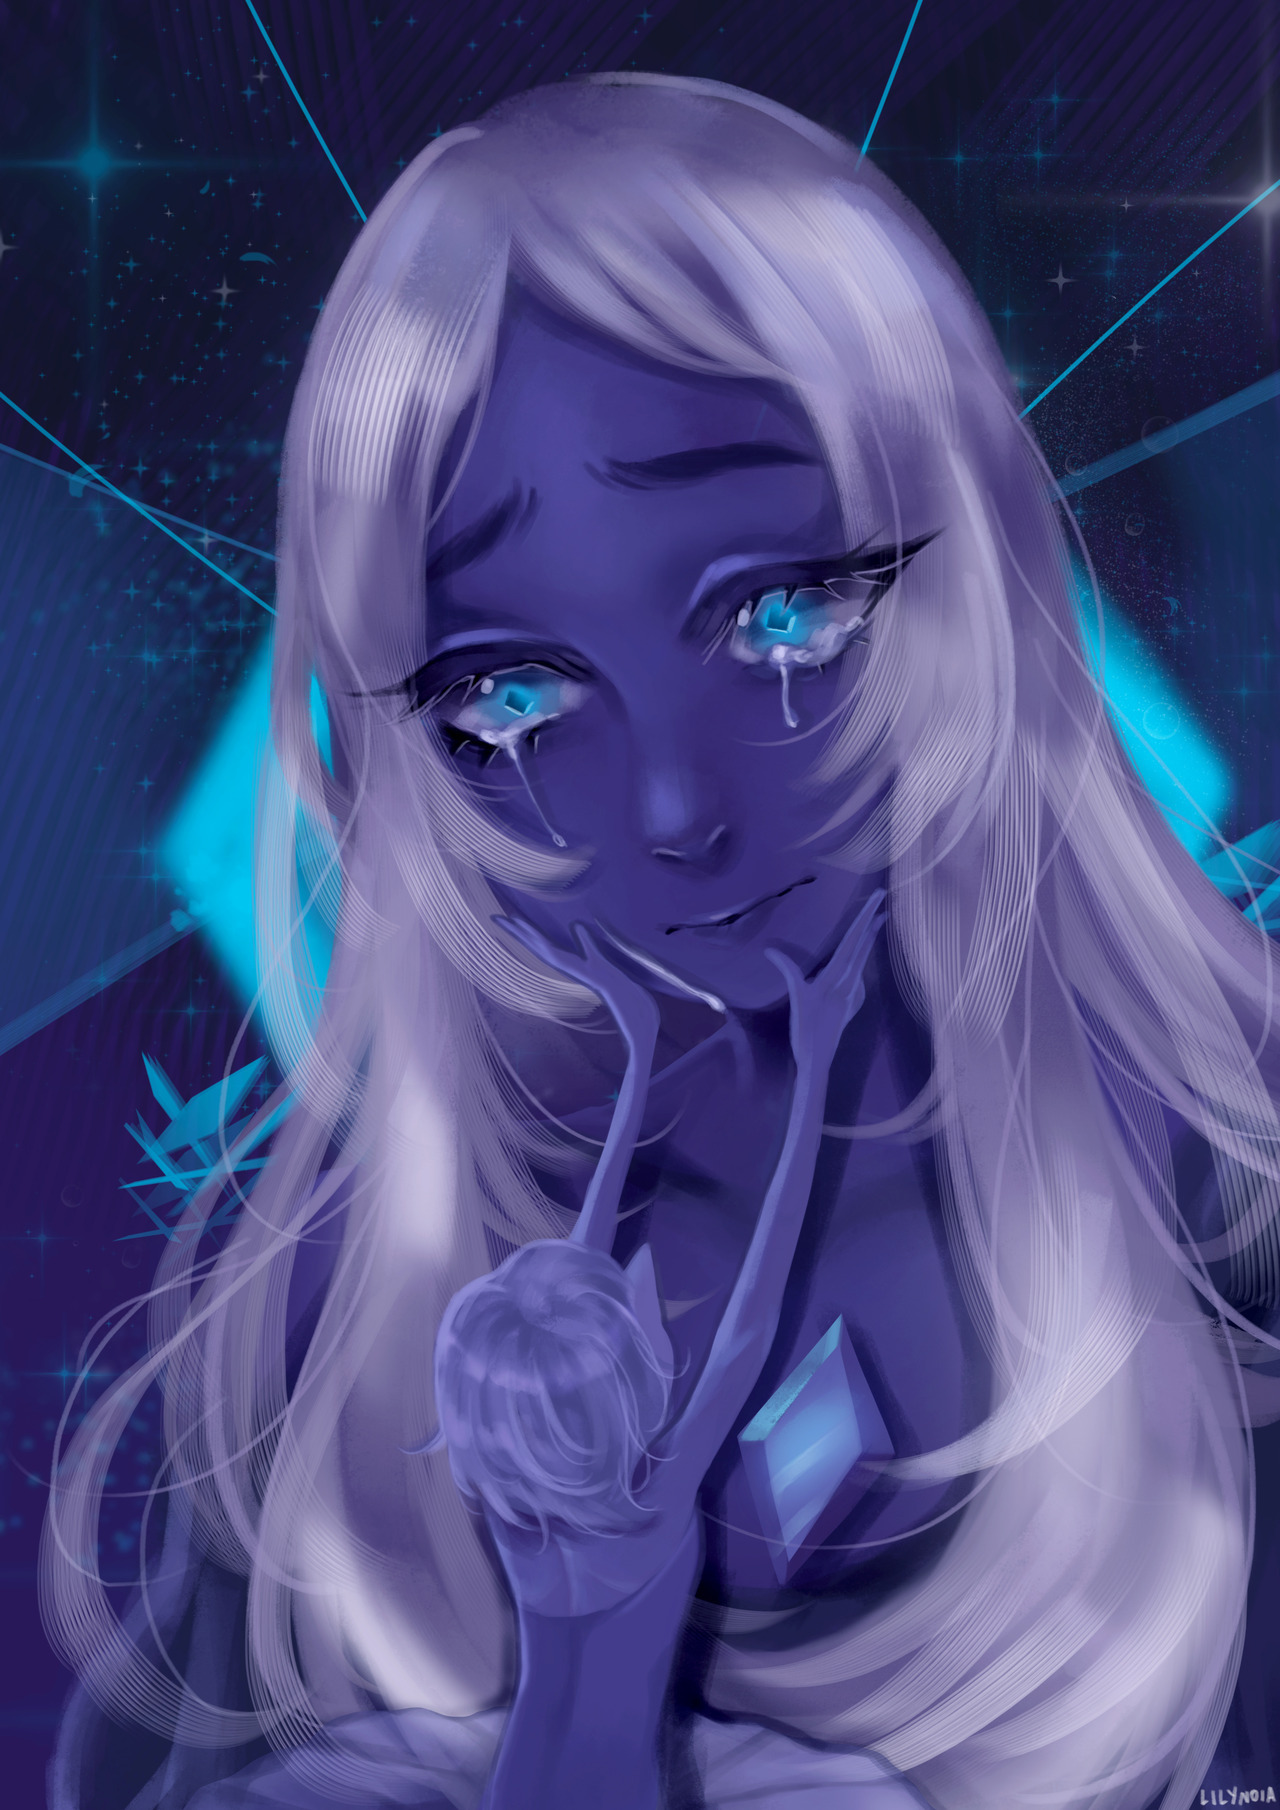 “Please don’t cry my Diamond.”